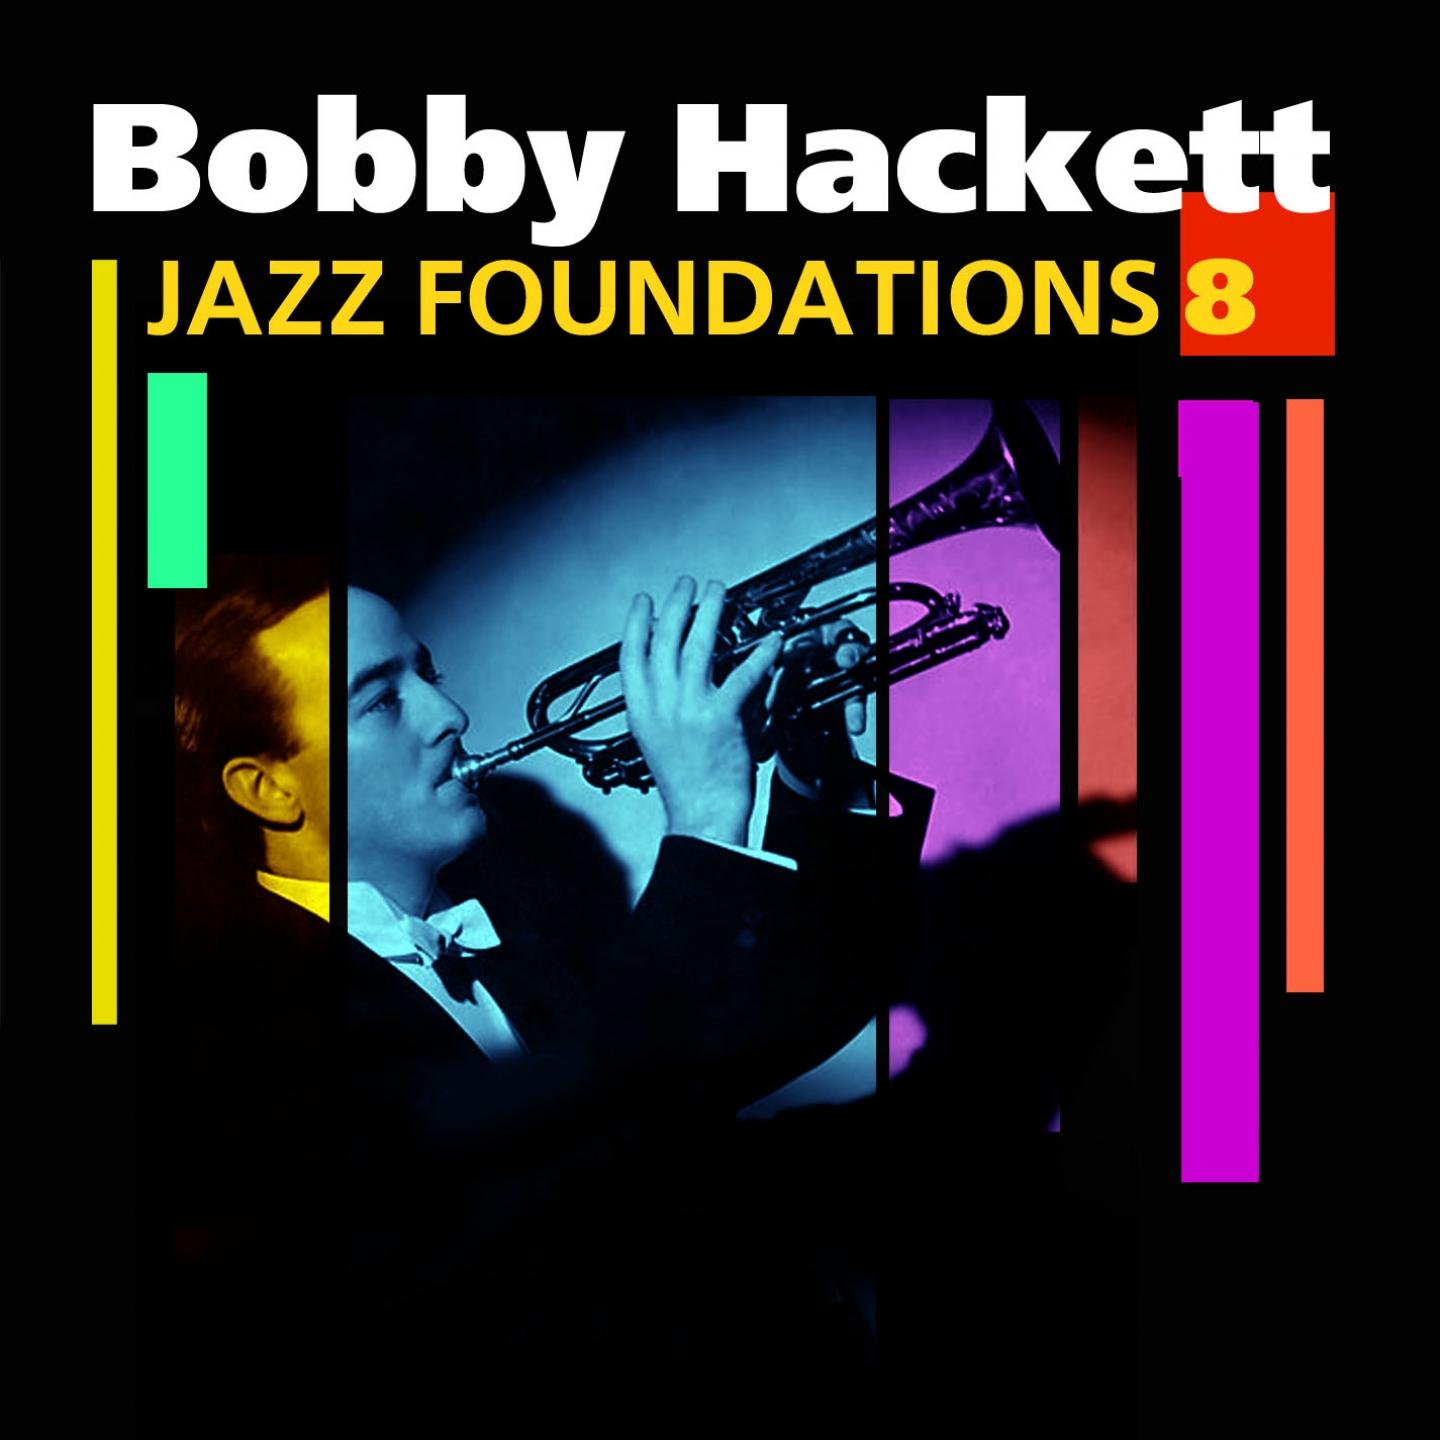 Jazz Foundations Vol. 8